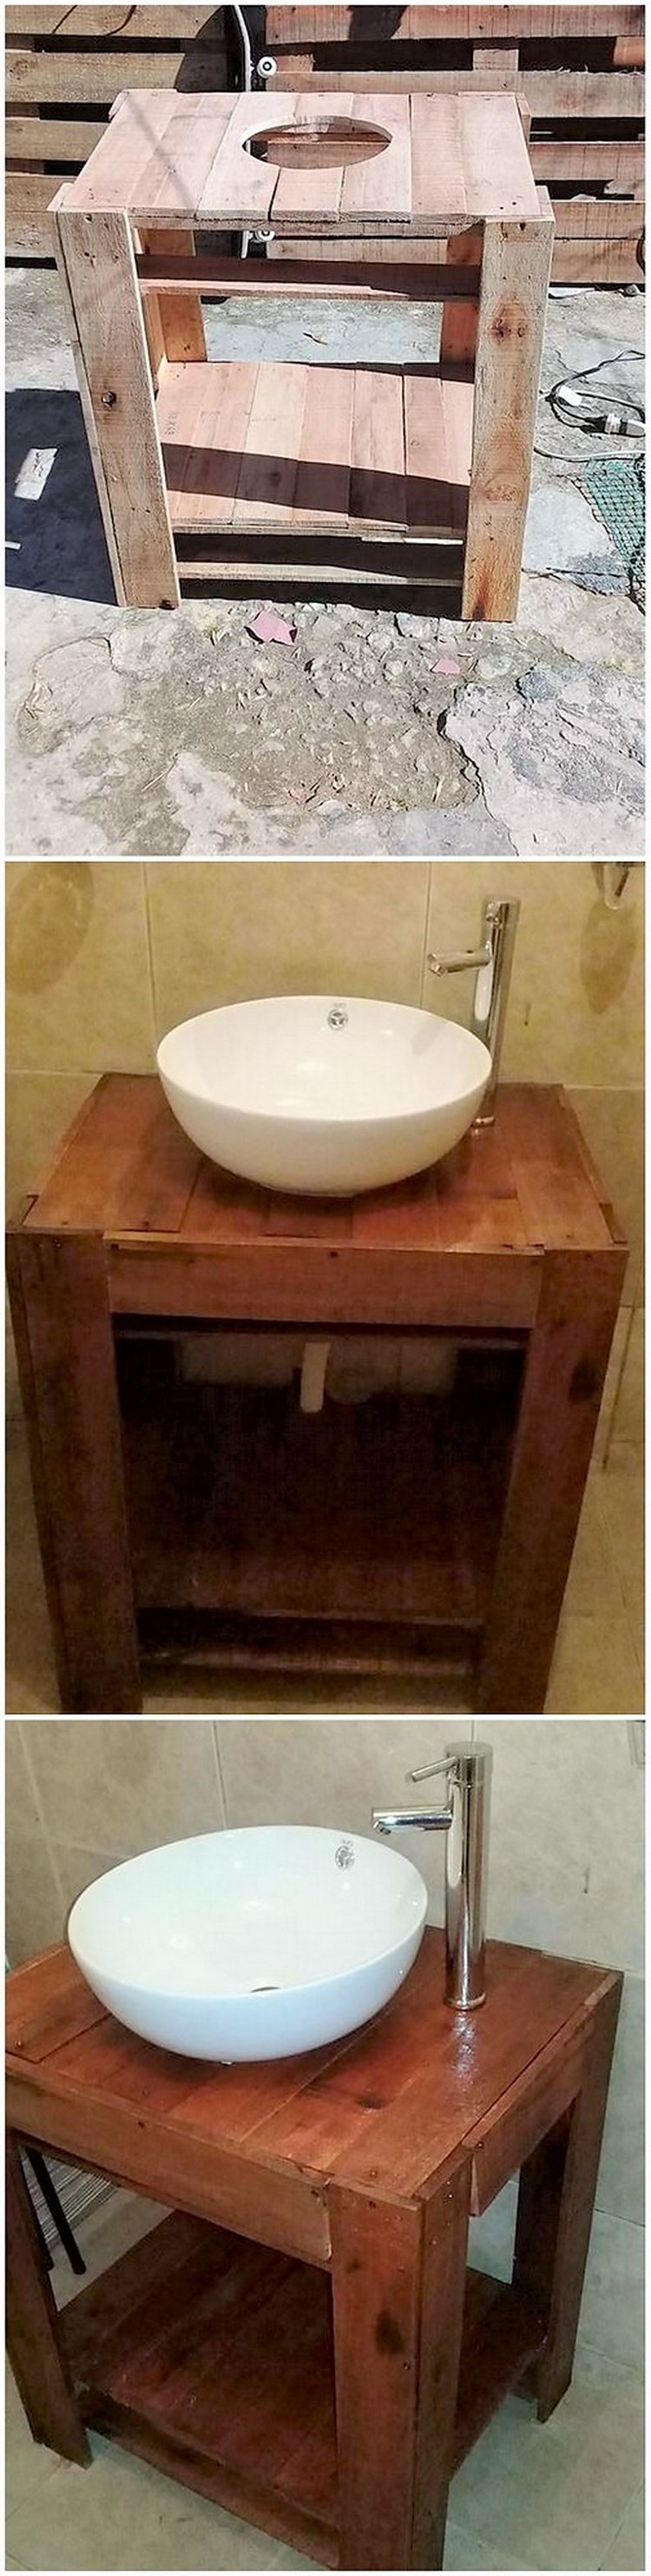 DIY Pallet Sink